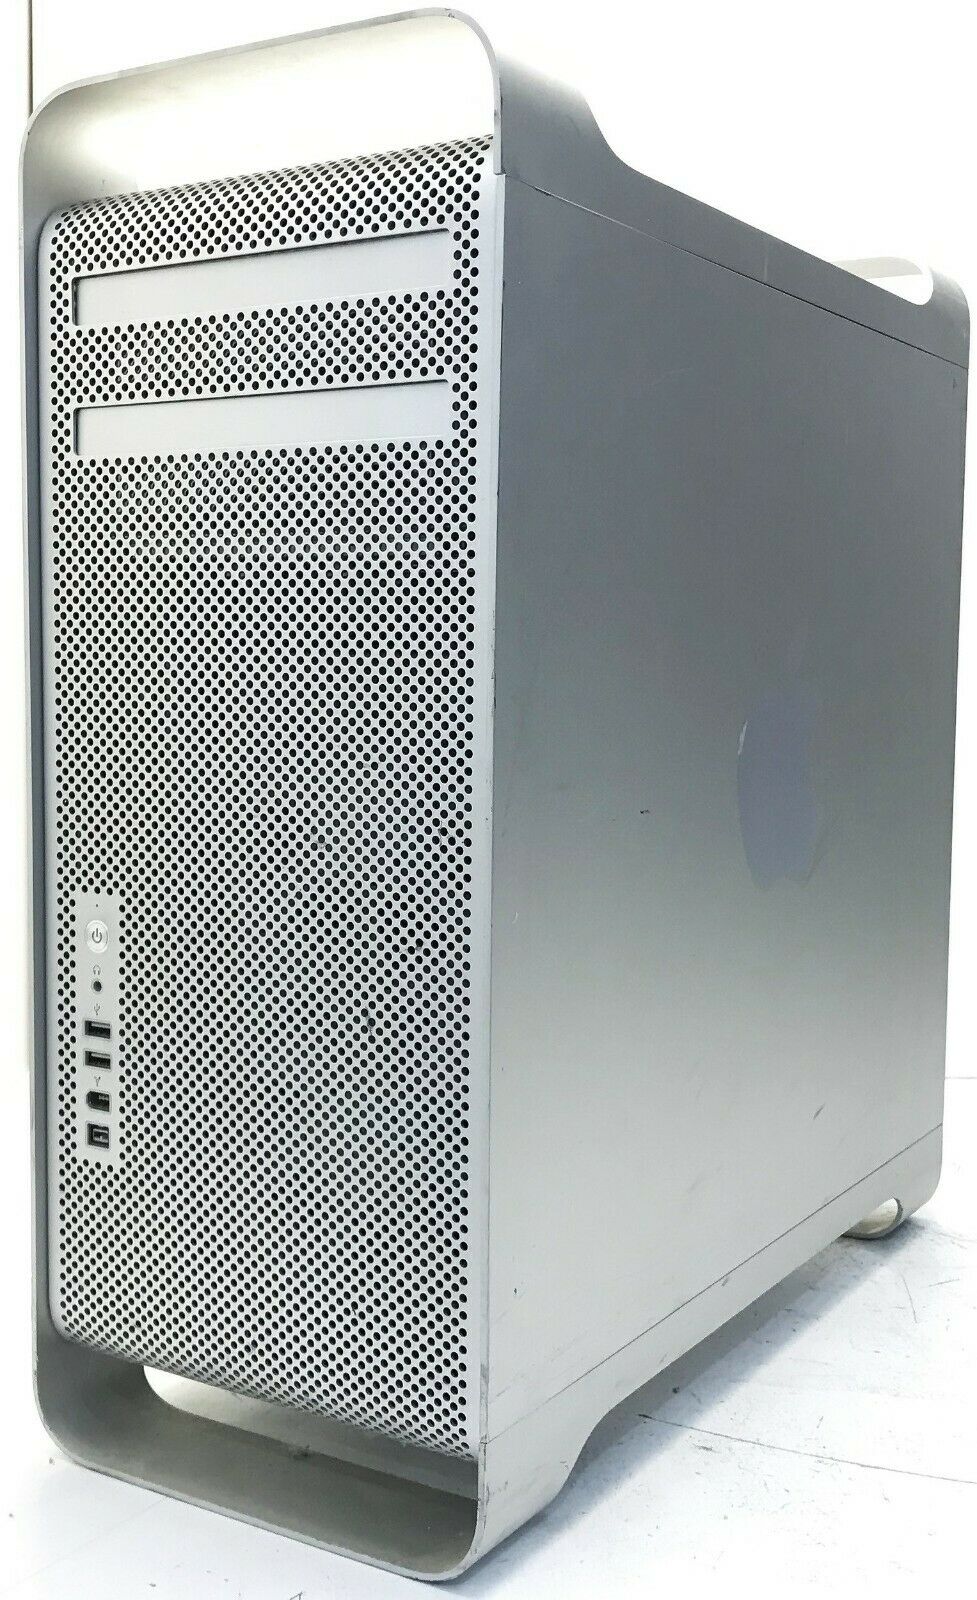 8 core mac pro dual processor